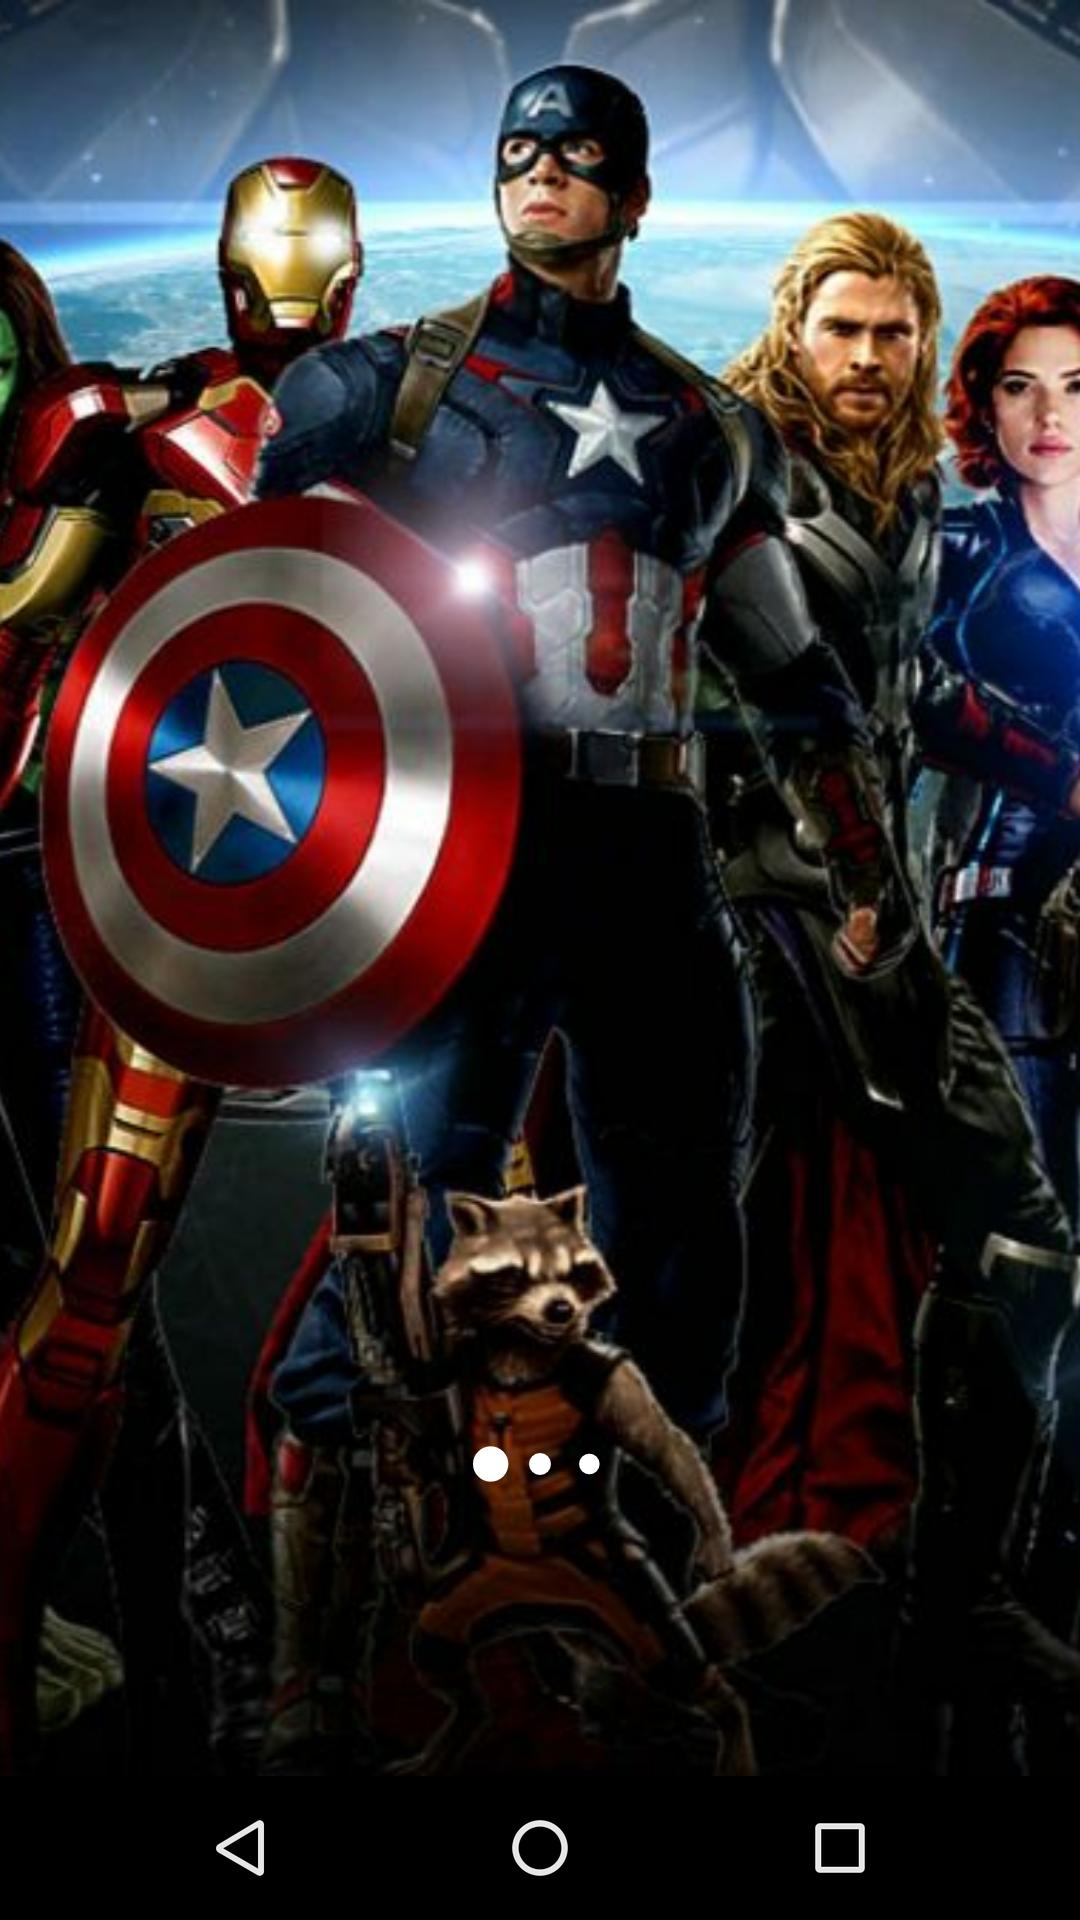 avengers wallpaper for android,captain america,superhero,hero,fictional character,movie